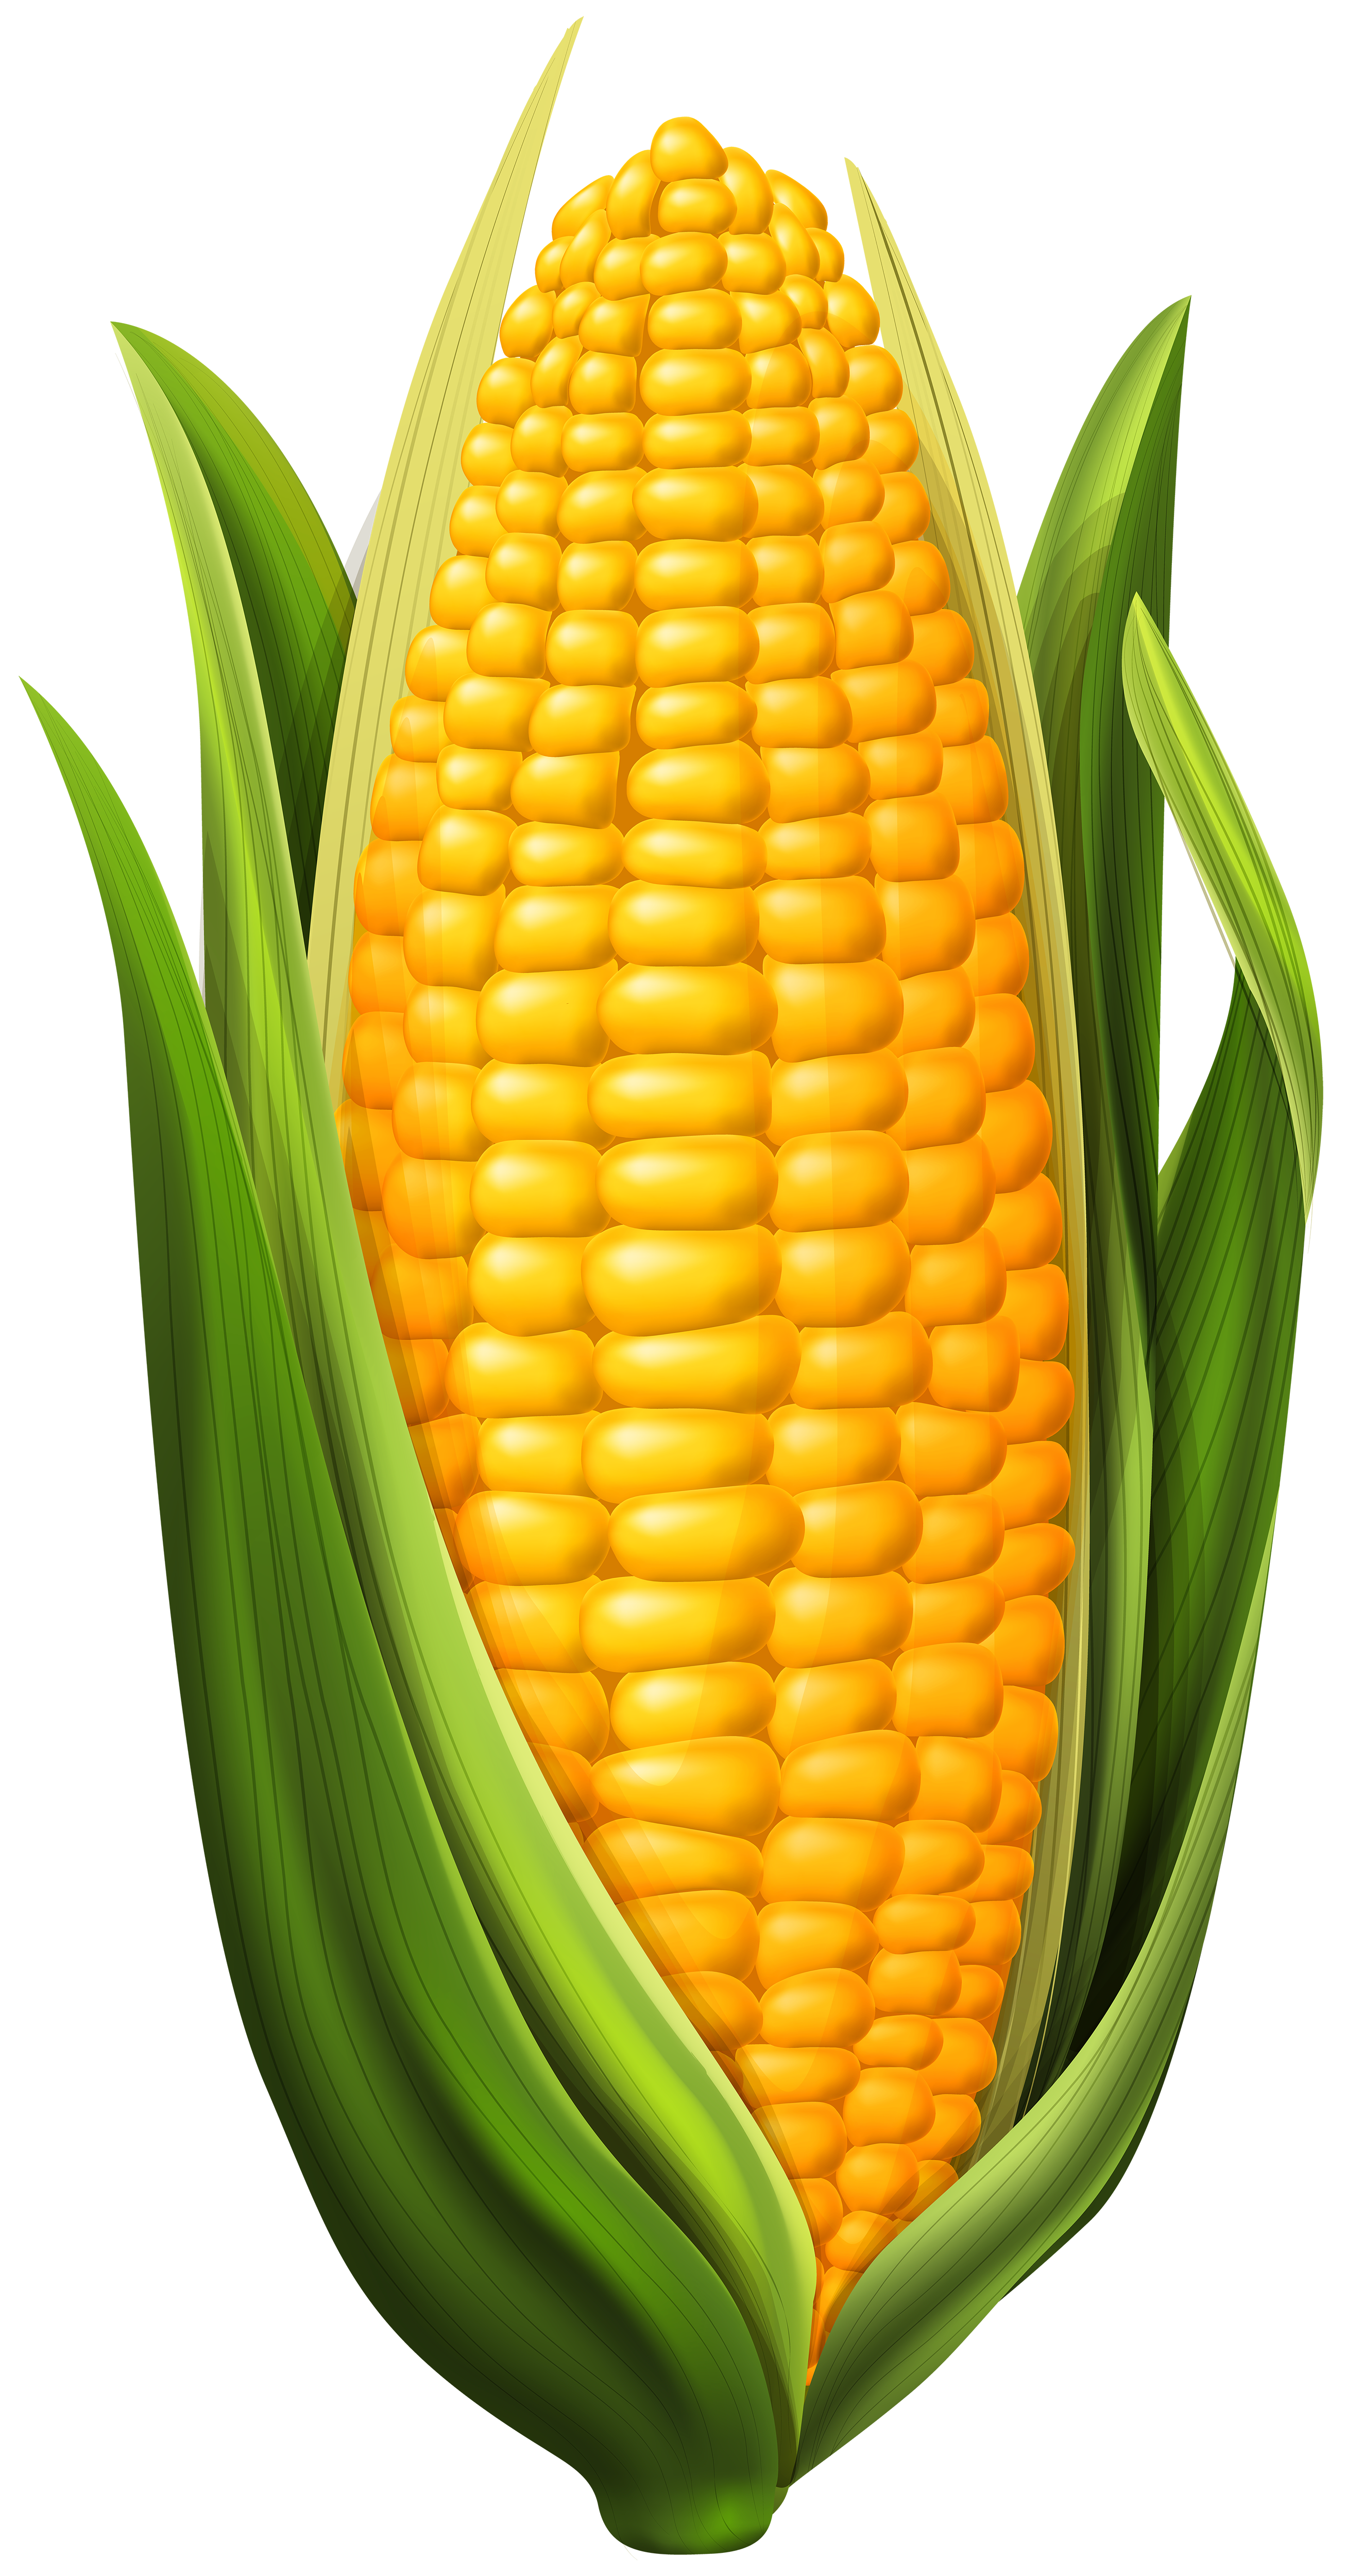 Corn Clipart Group (+), HD Clipart.